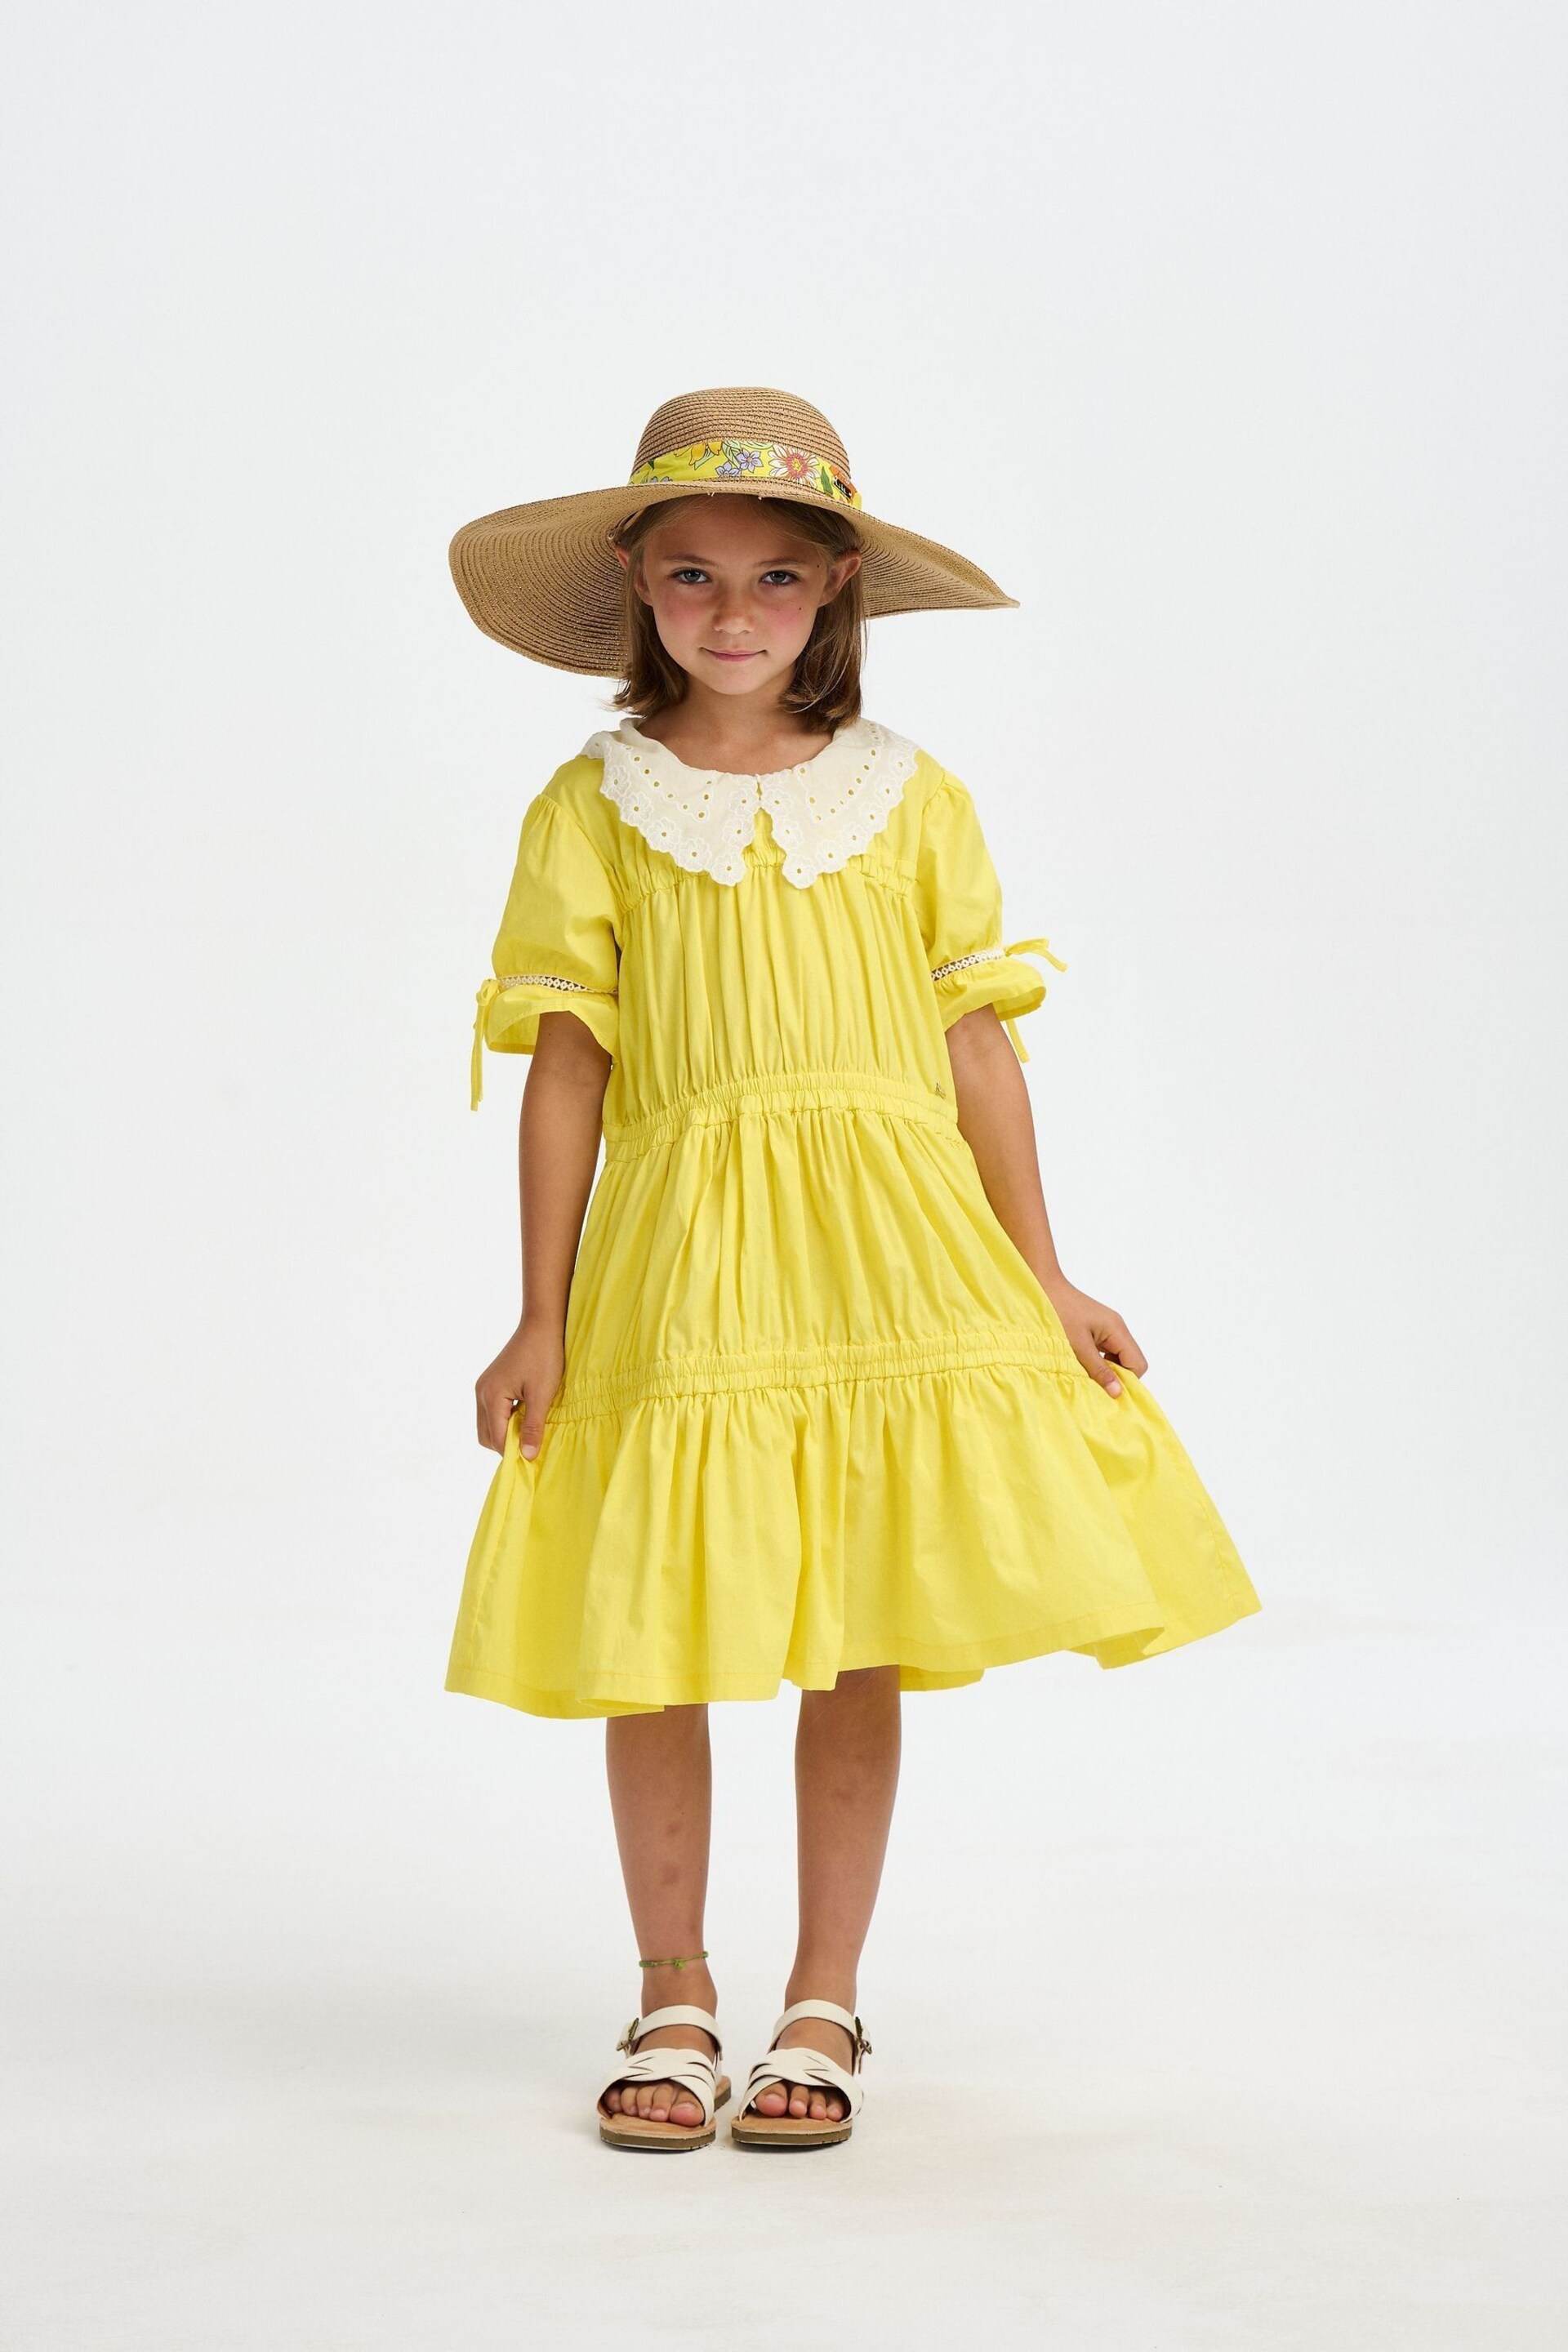 Nicole Miller Cream/Yellow Straw Sun Hat - Image 6 of 6